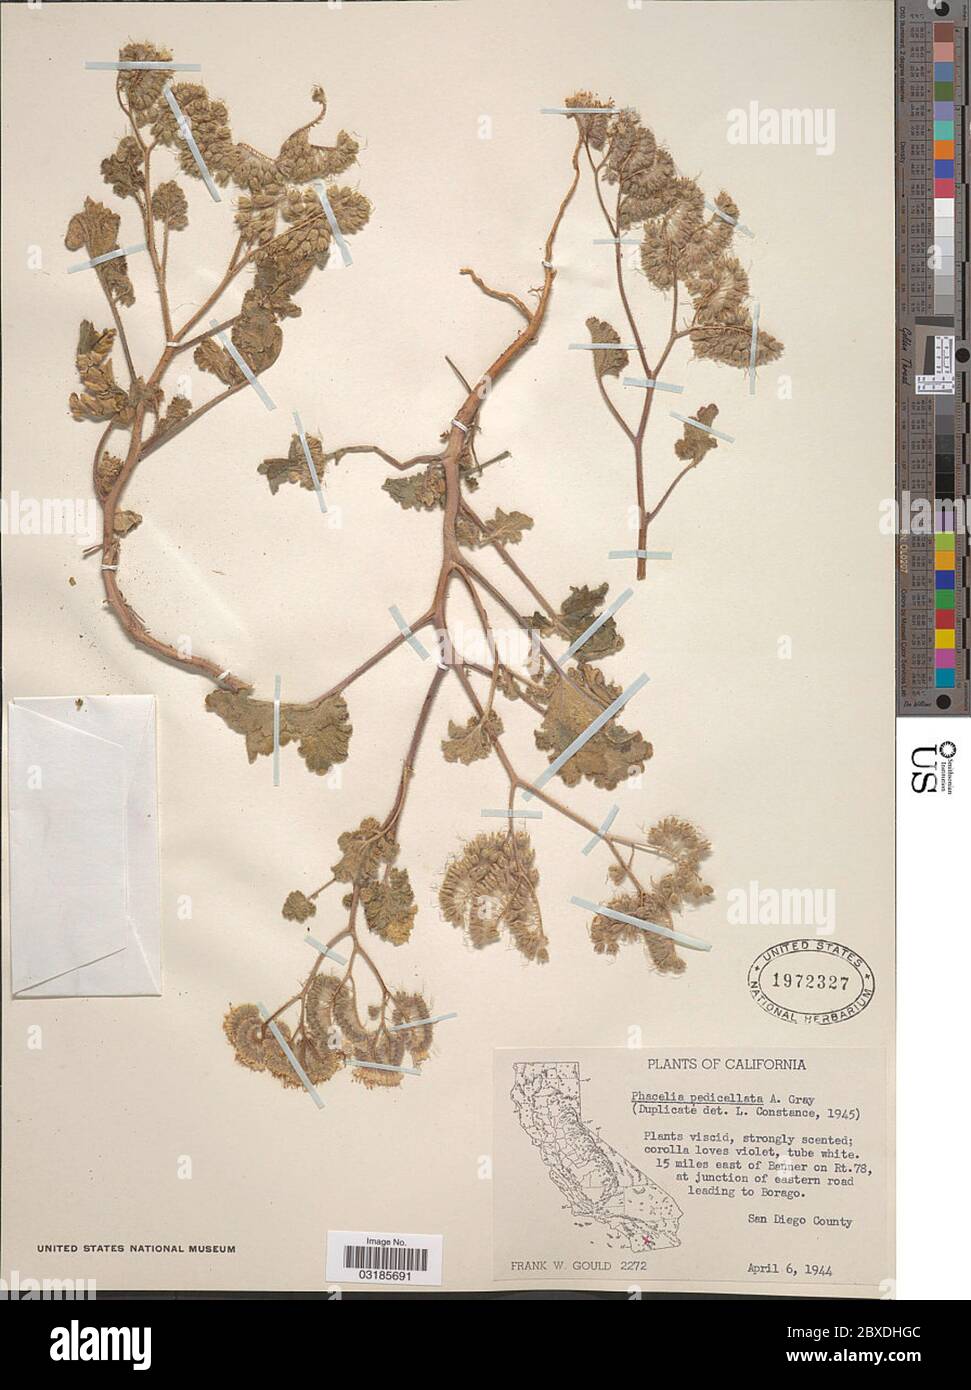 Phacelia pedicellata A Gray Phacelia pedicellata A Gray. Stock Photo